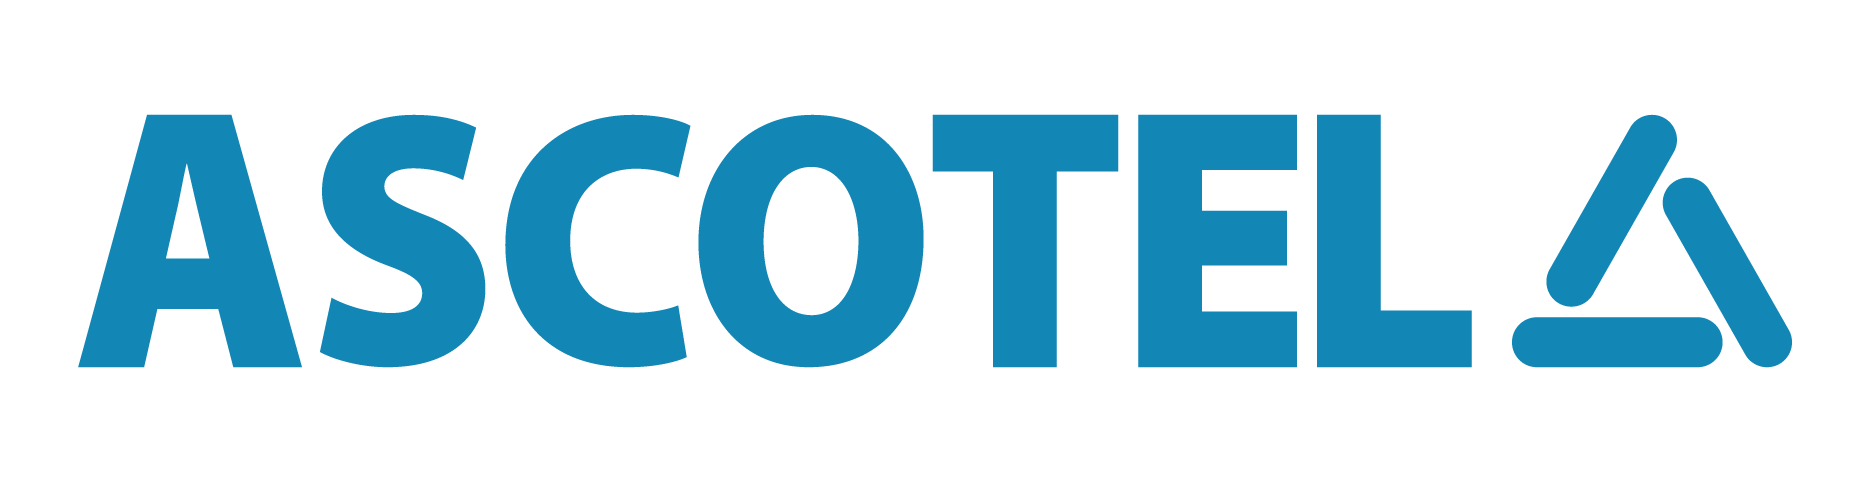 Ascotel new logo rect